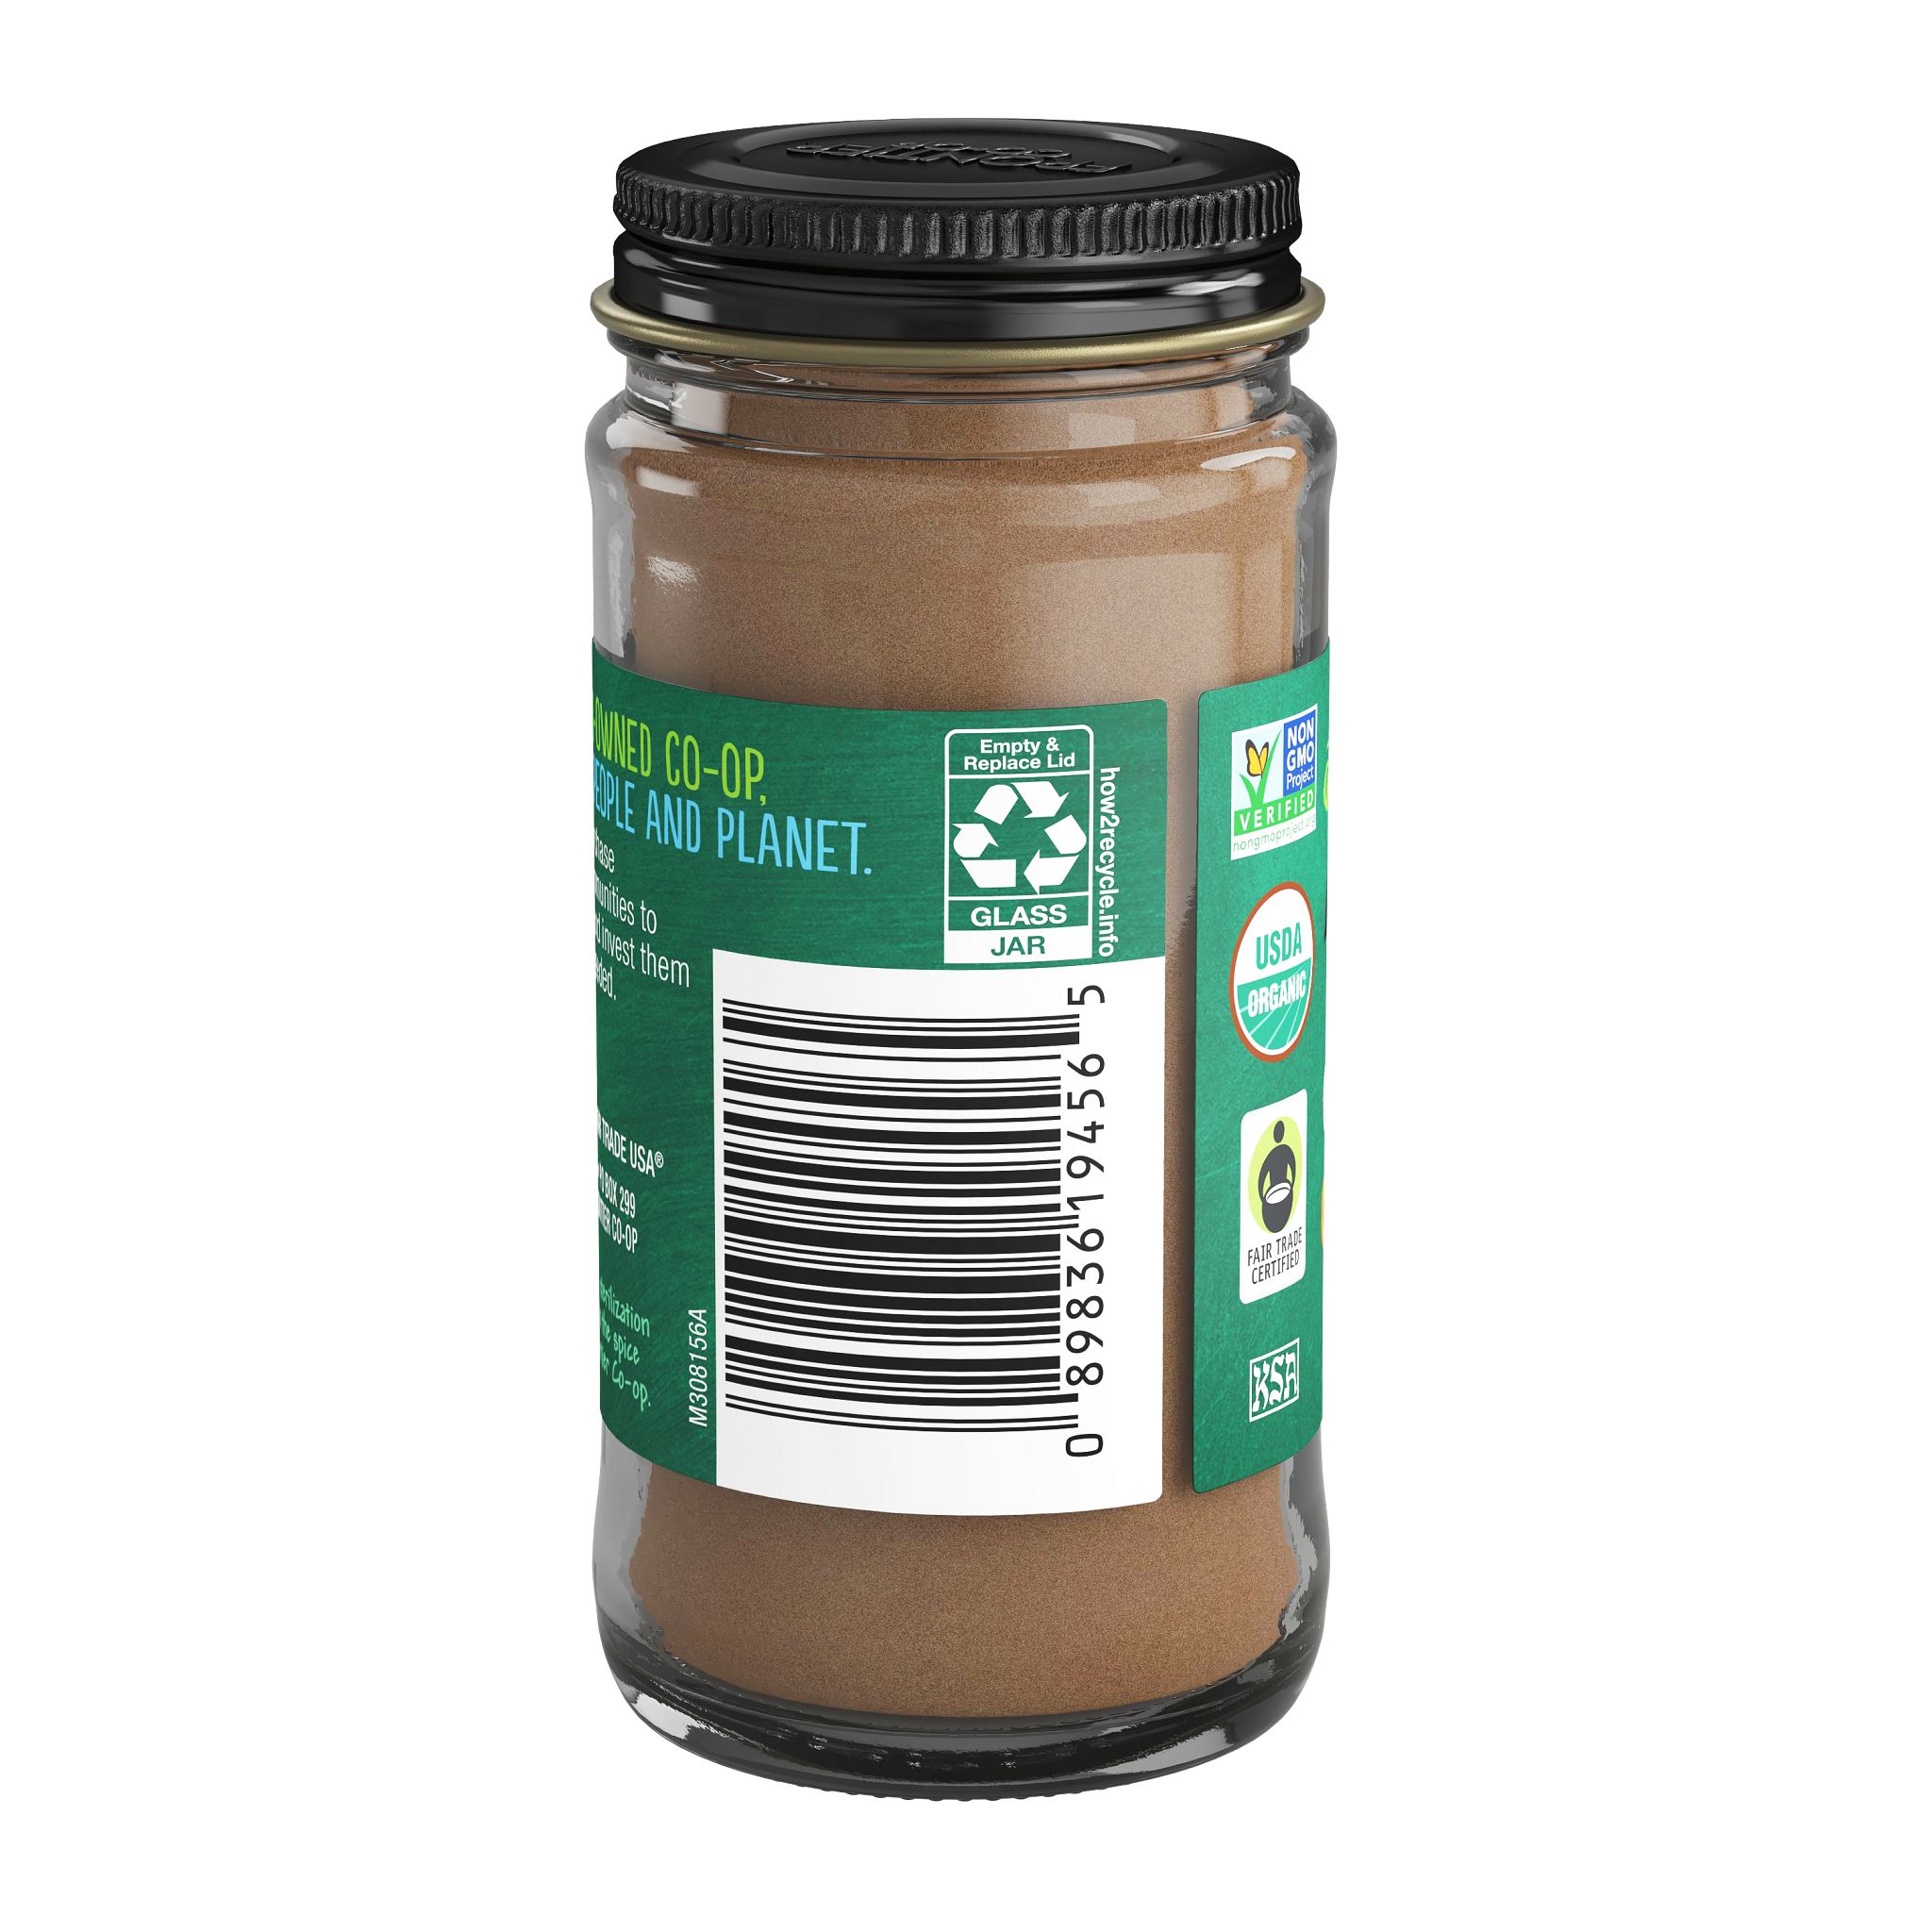 Frontier Co-op Fair Trade Organic Ceylon Cinnamon, 1.76 oz. - image 4 of 7